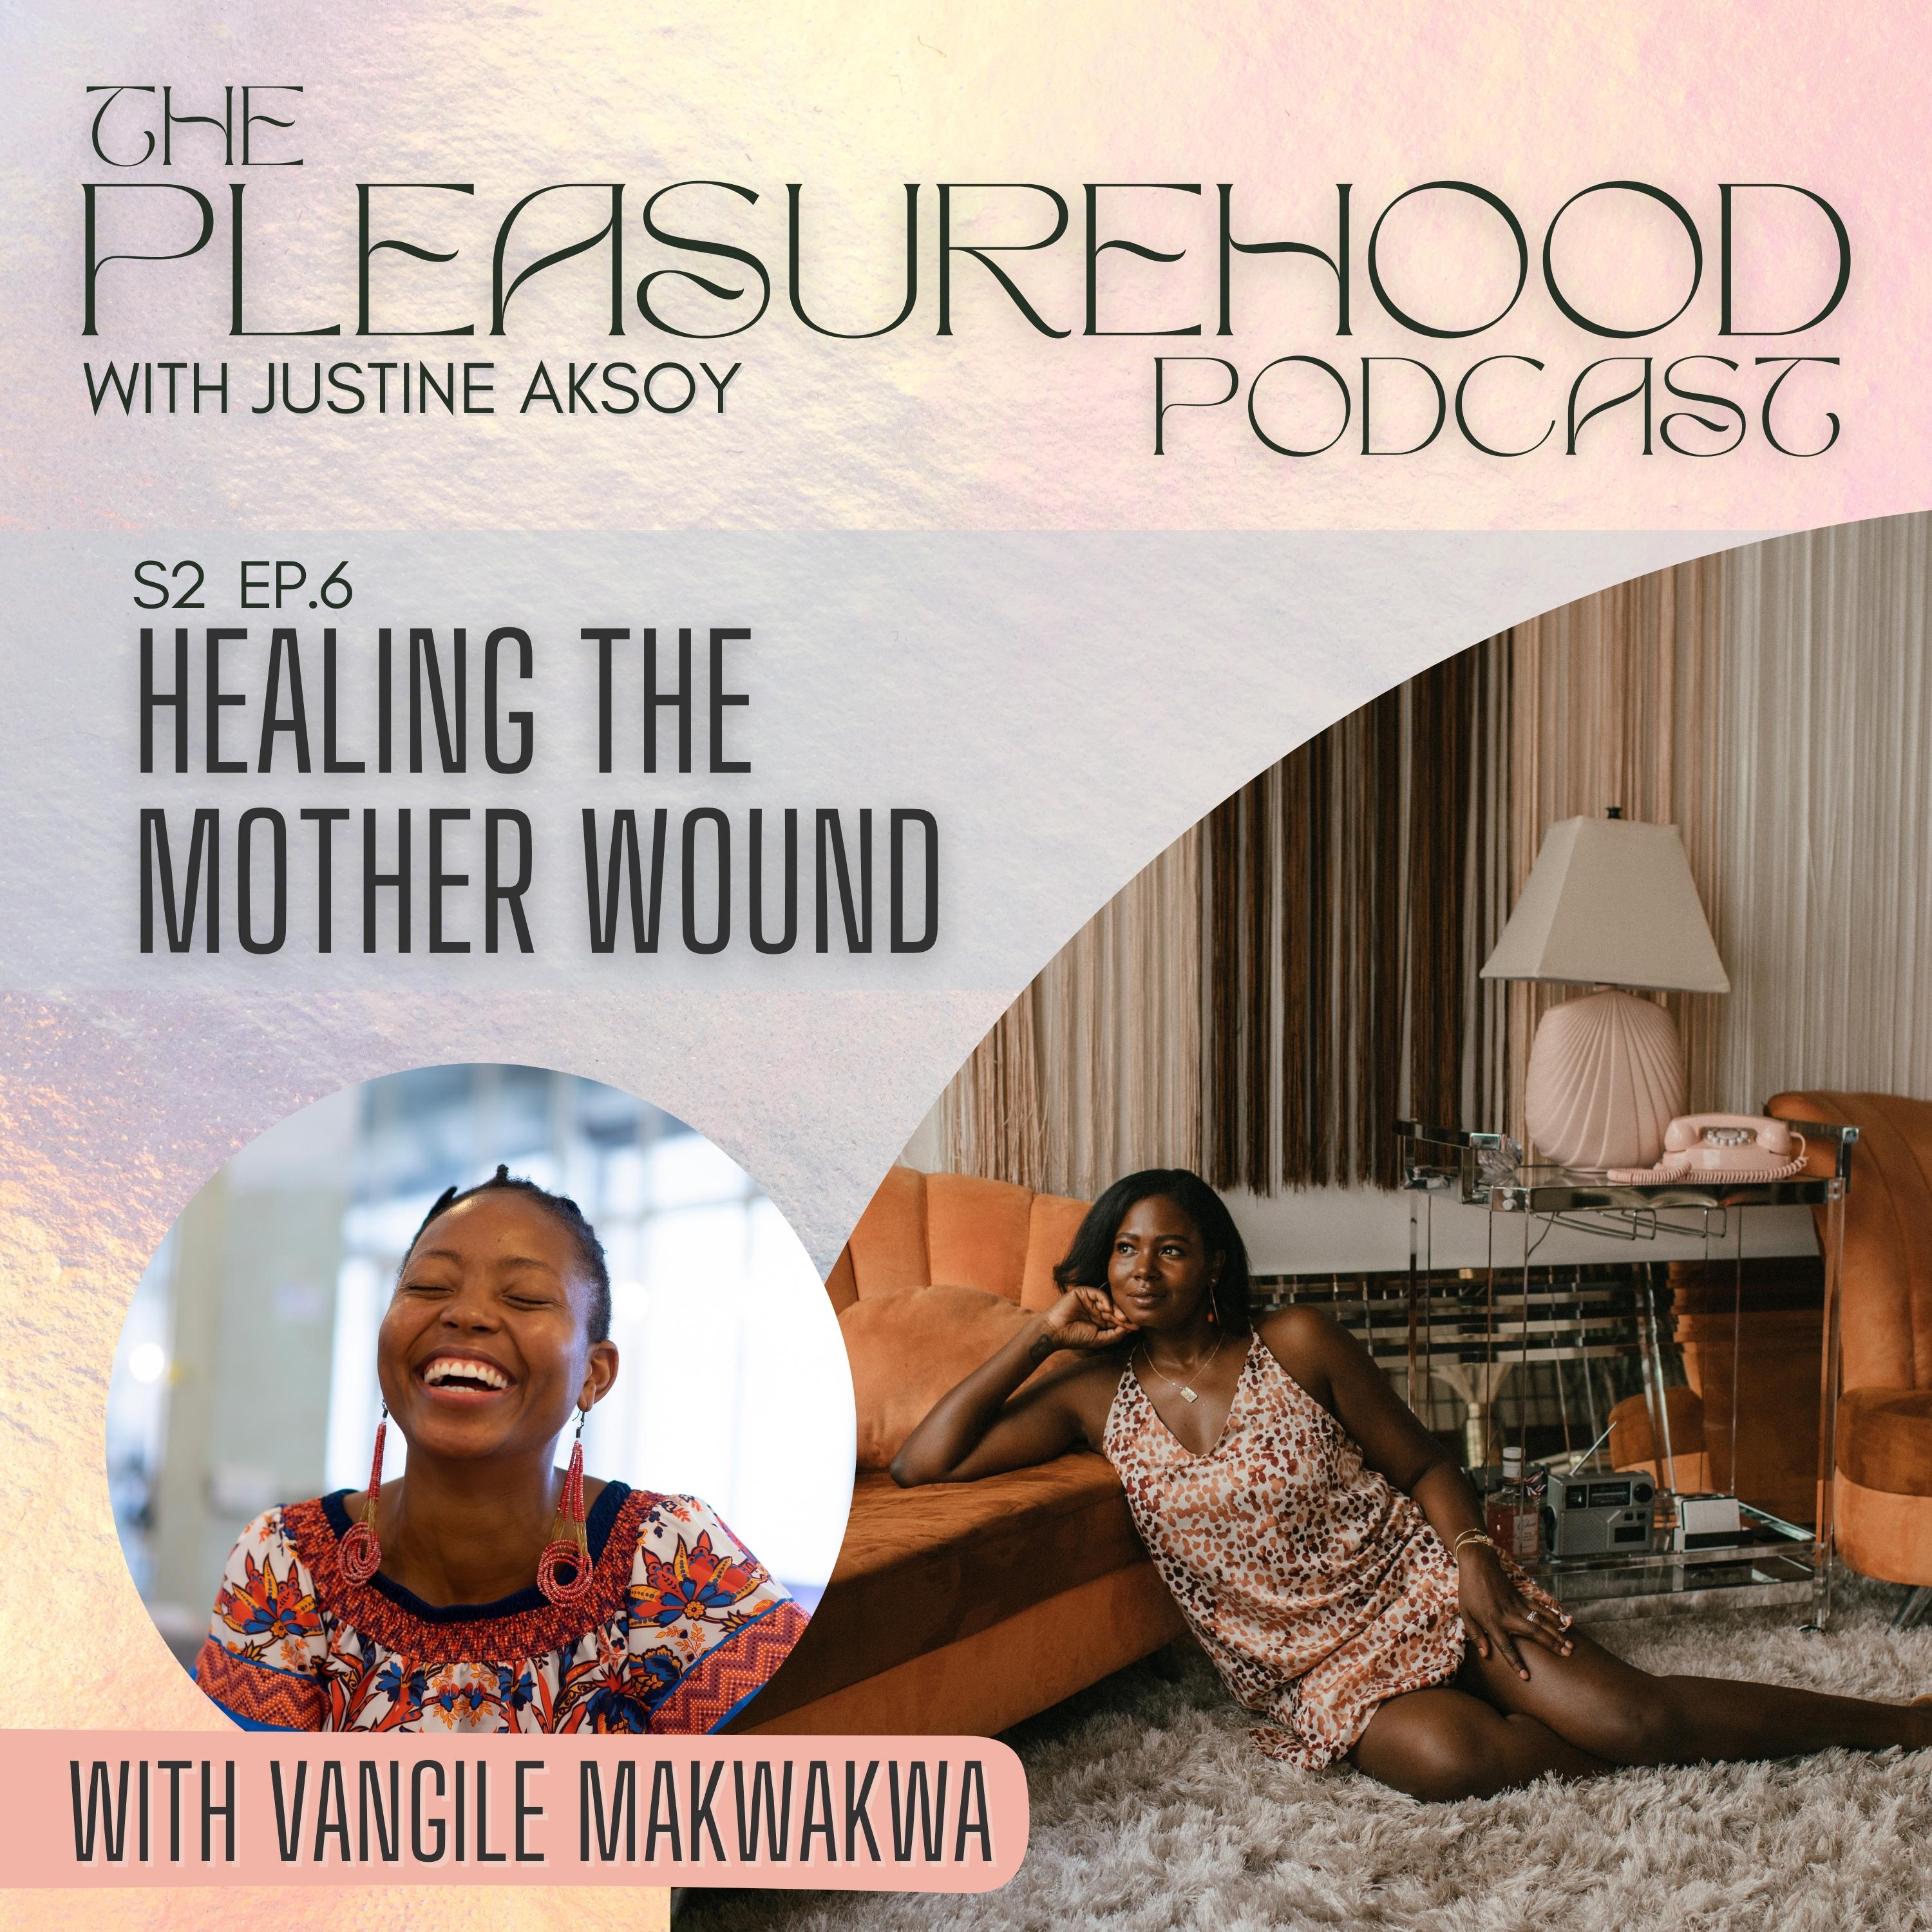 Healing the Mother Wound, with Vangile Makwakwa